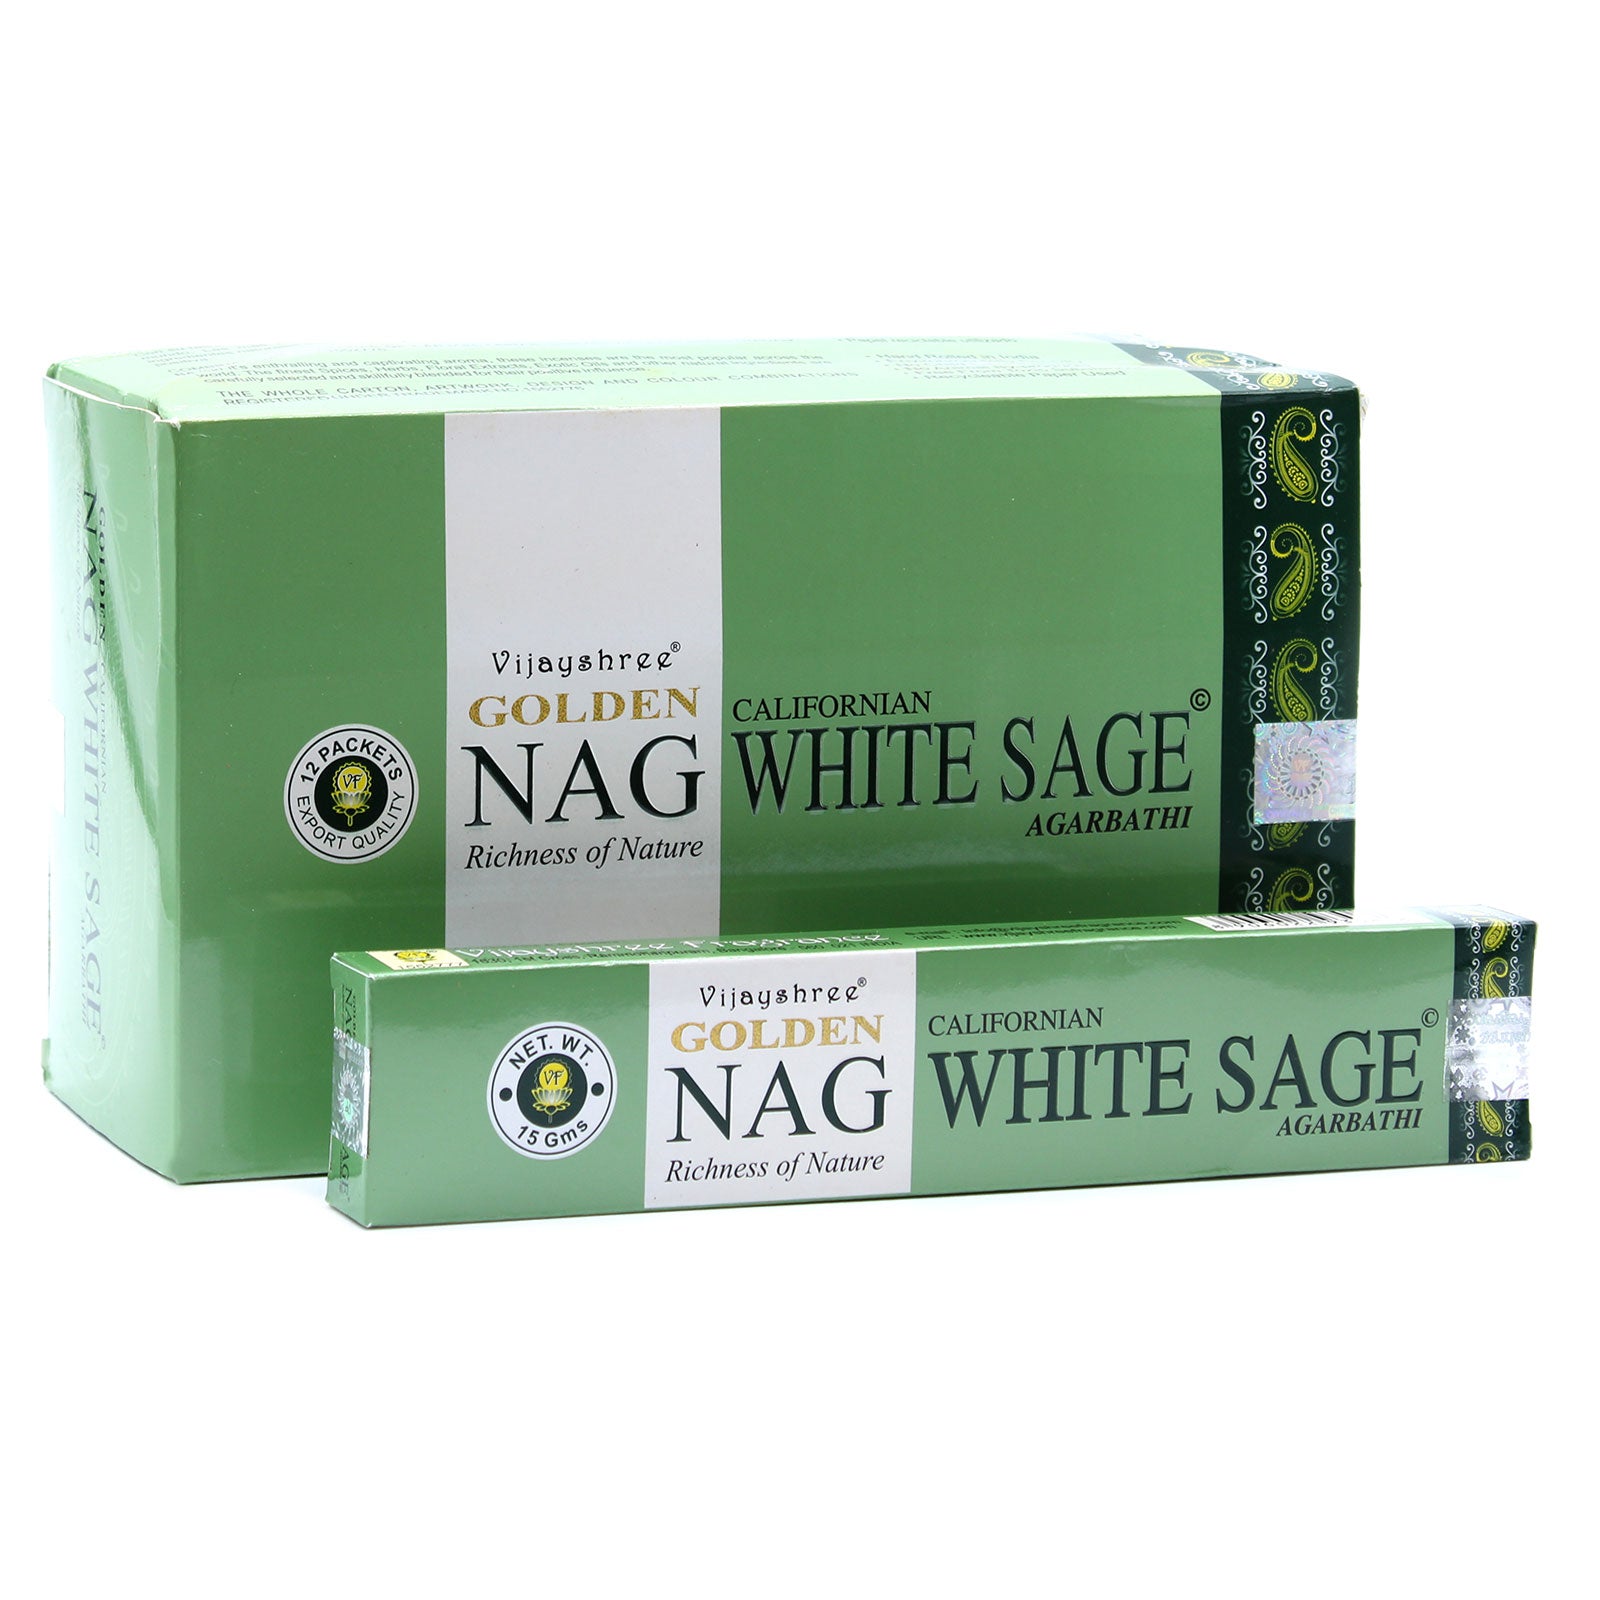 View 15g Golden Nag White Sage Incense information